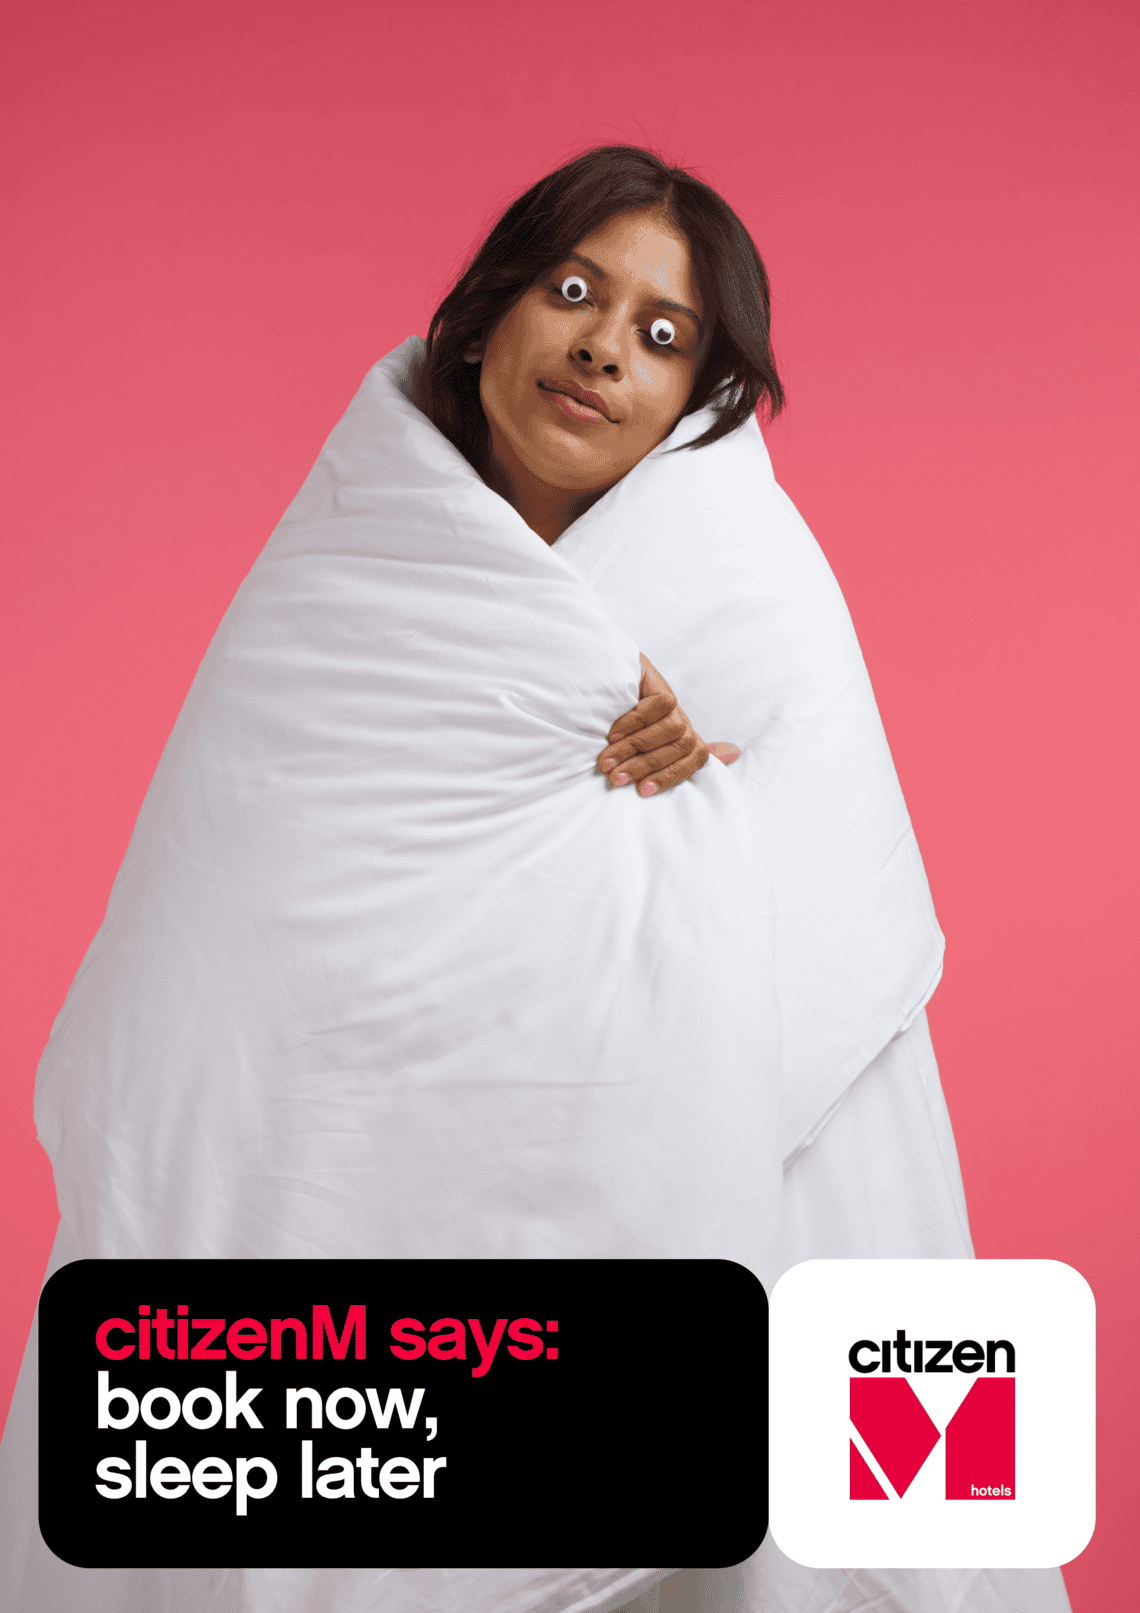 citizenM